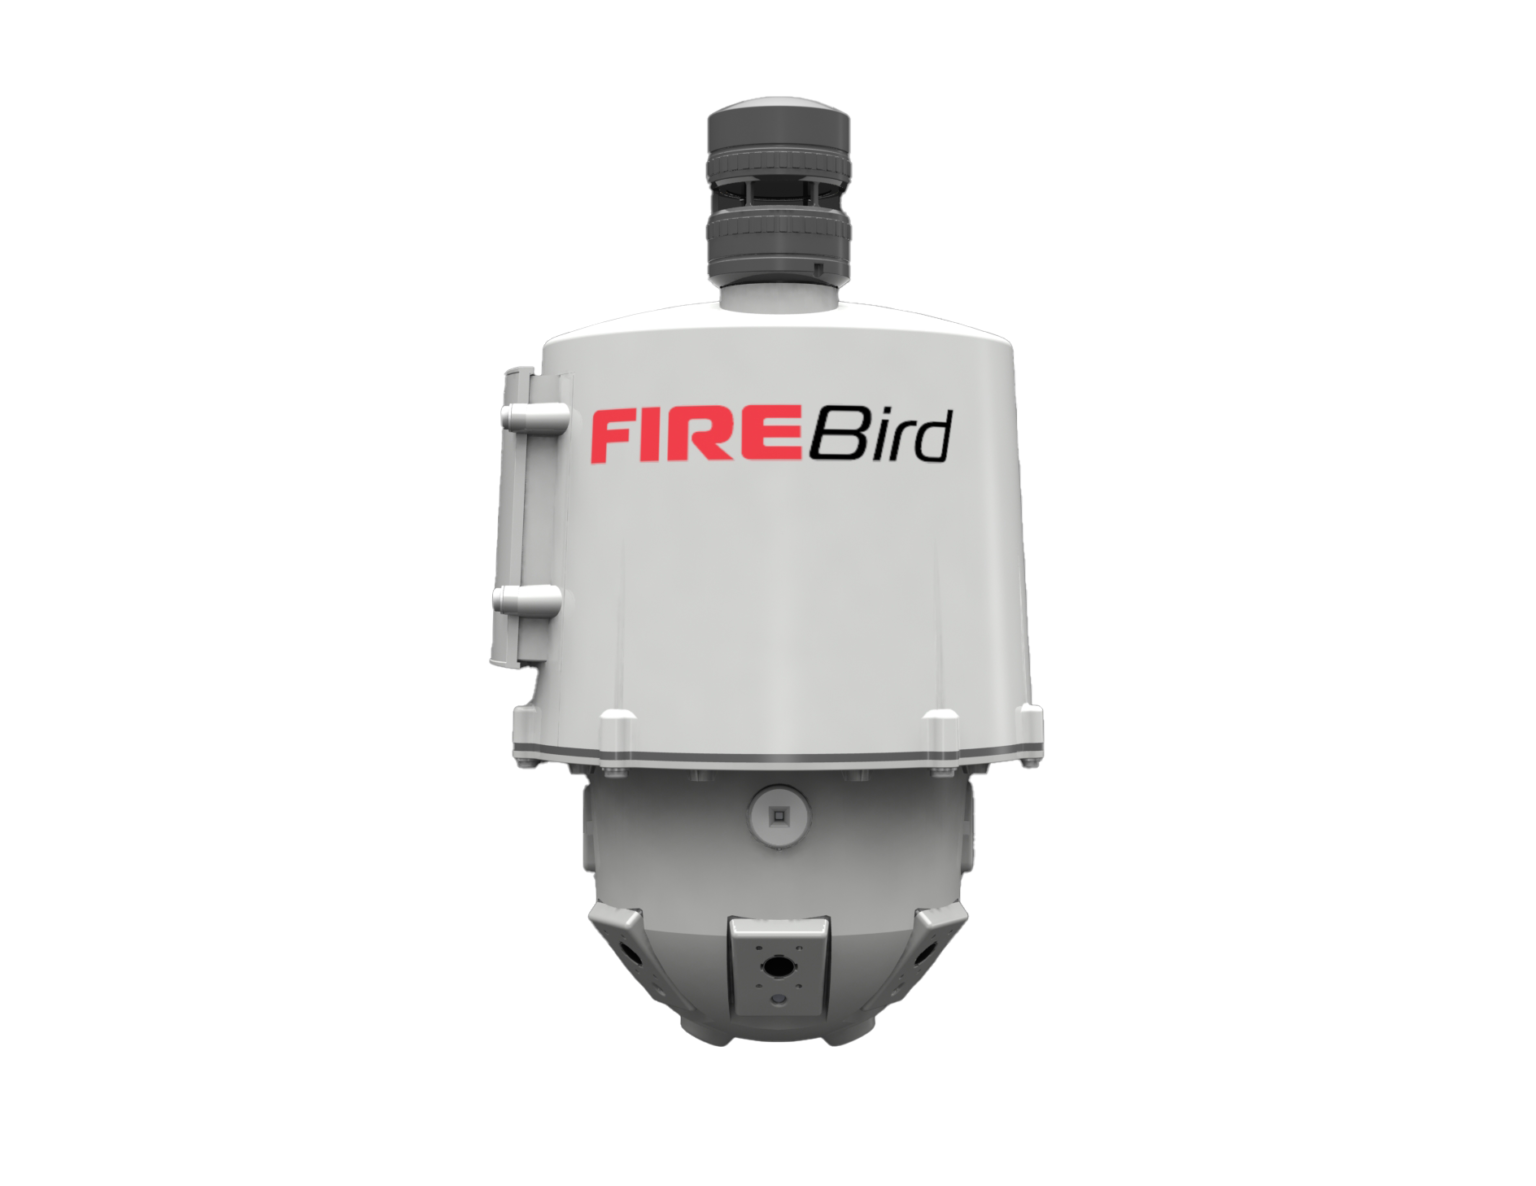 The FIREBird wildfire detector